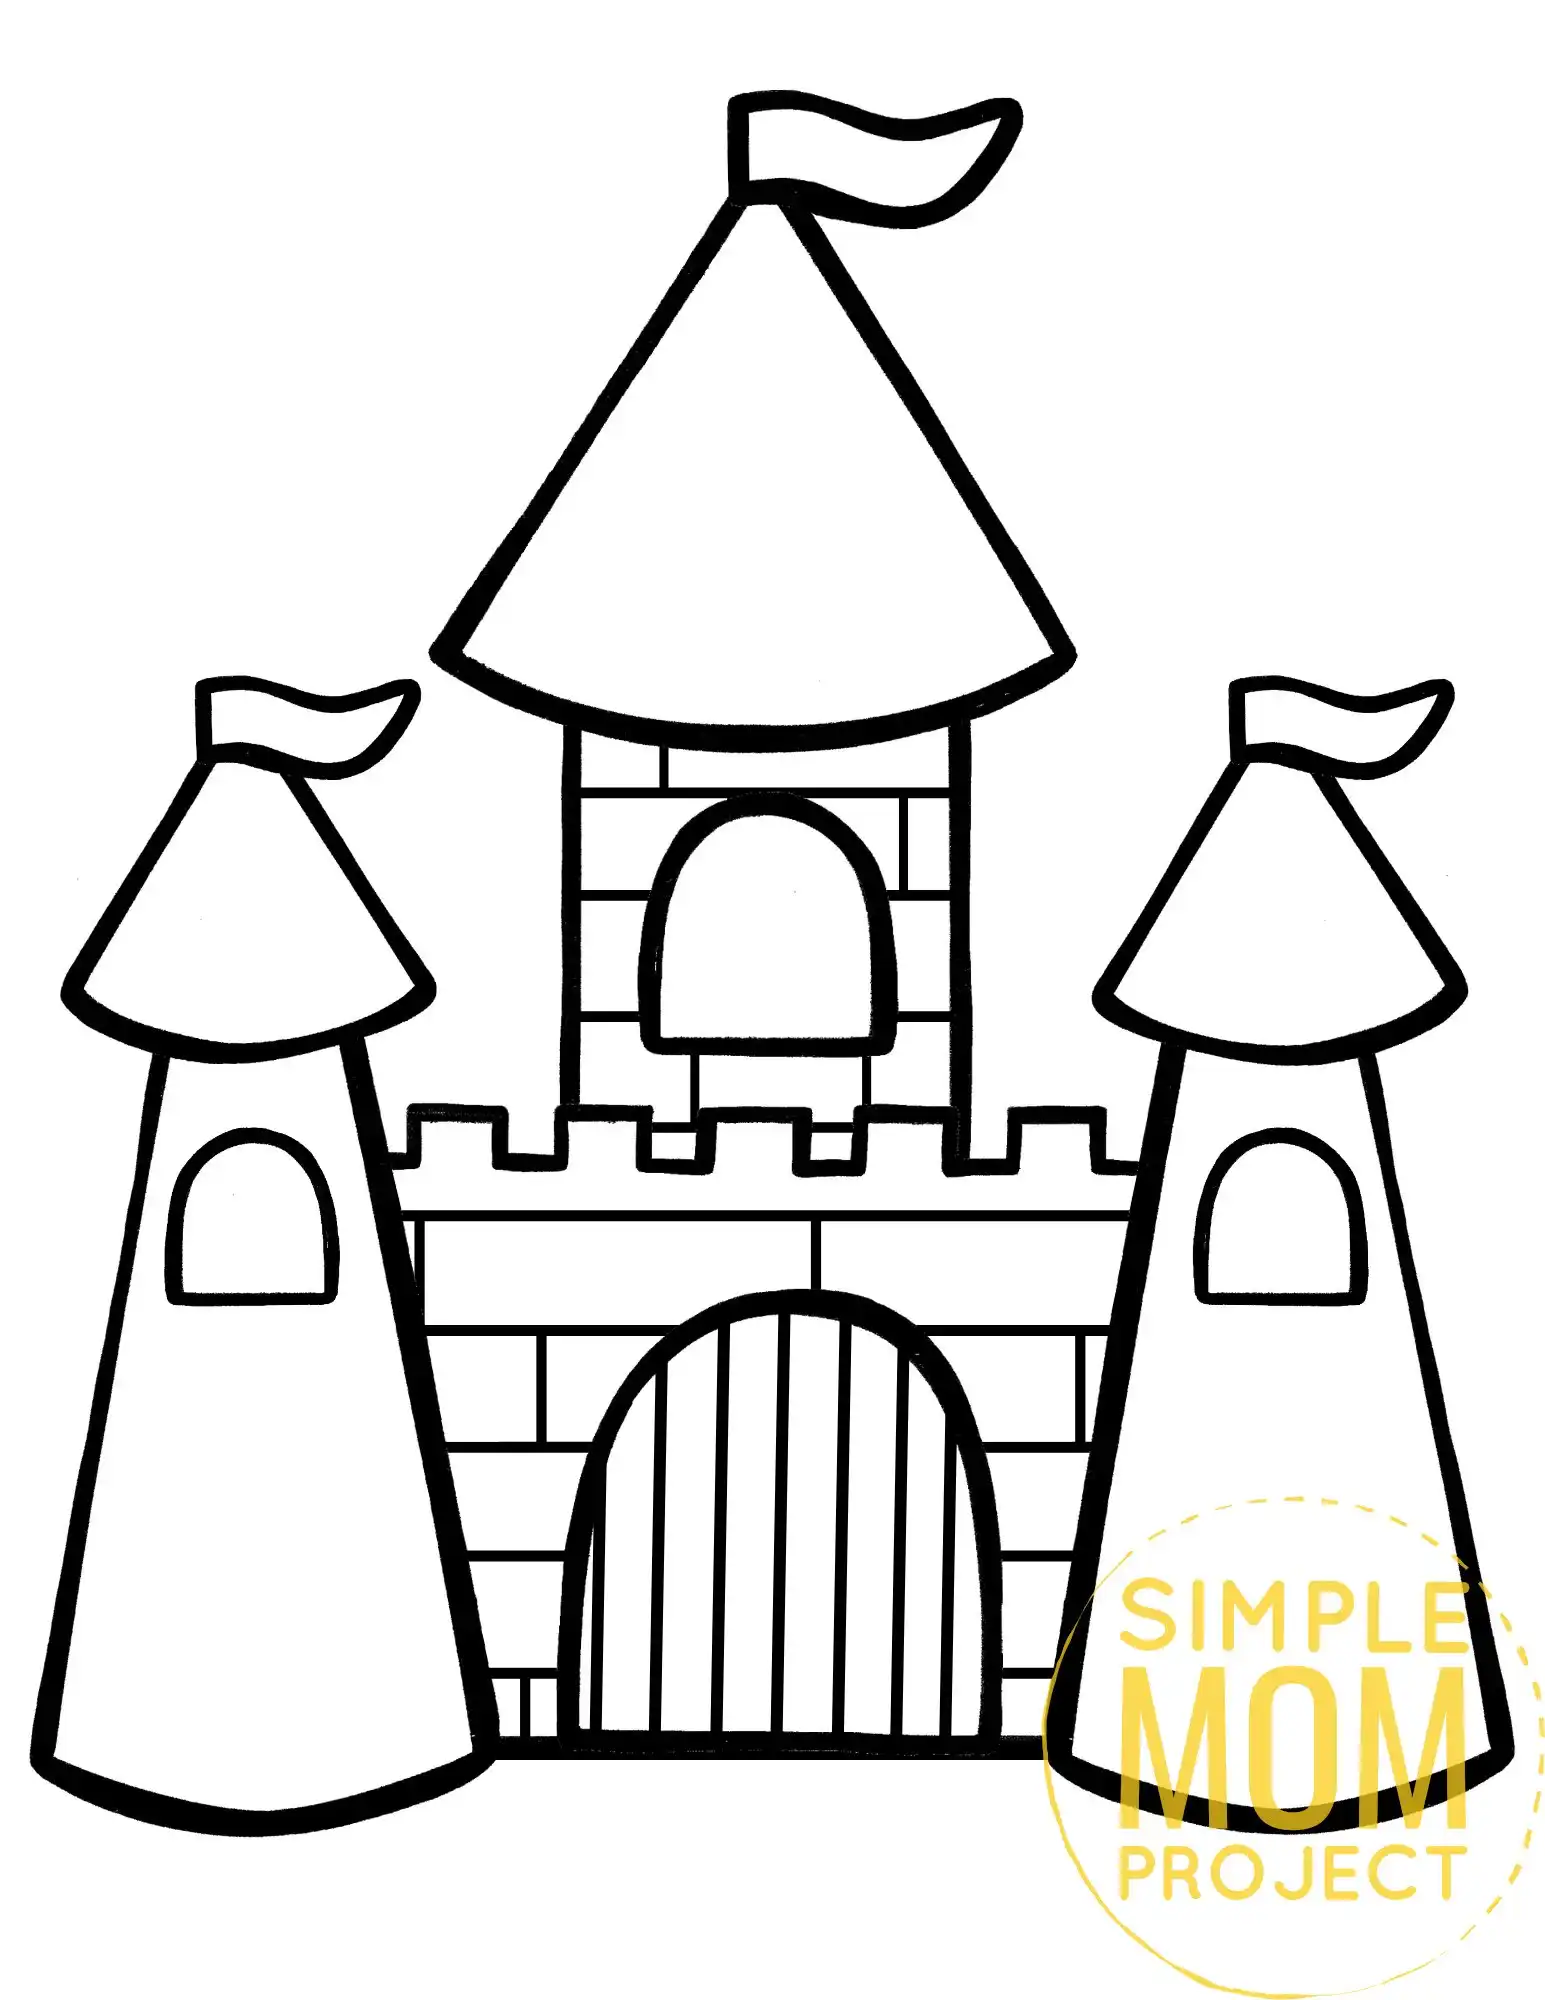 Free printable princess castle template â simple mom project